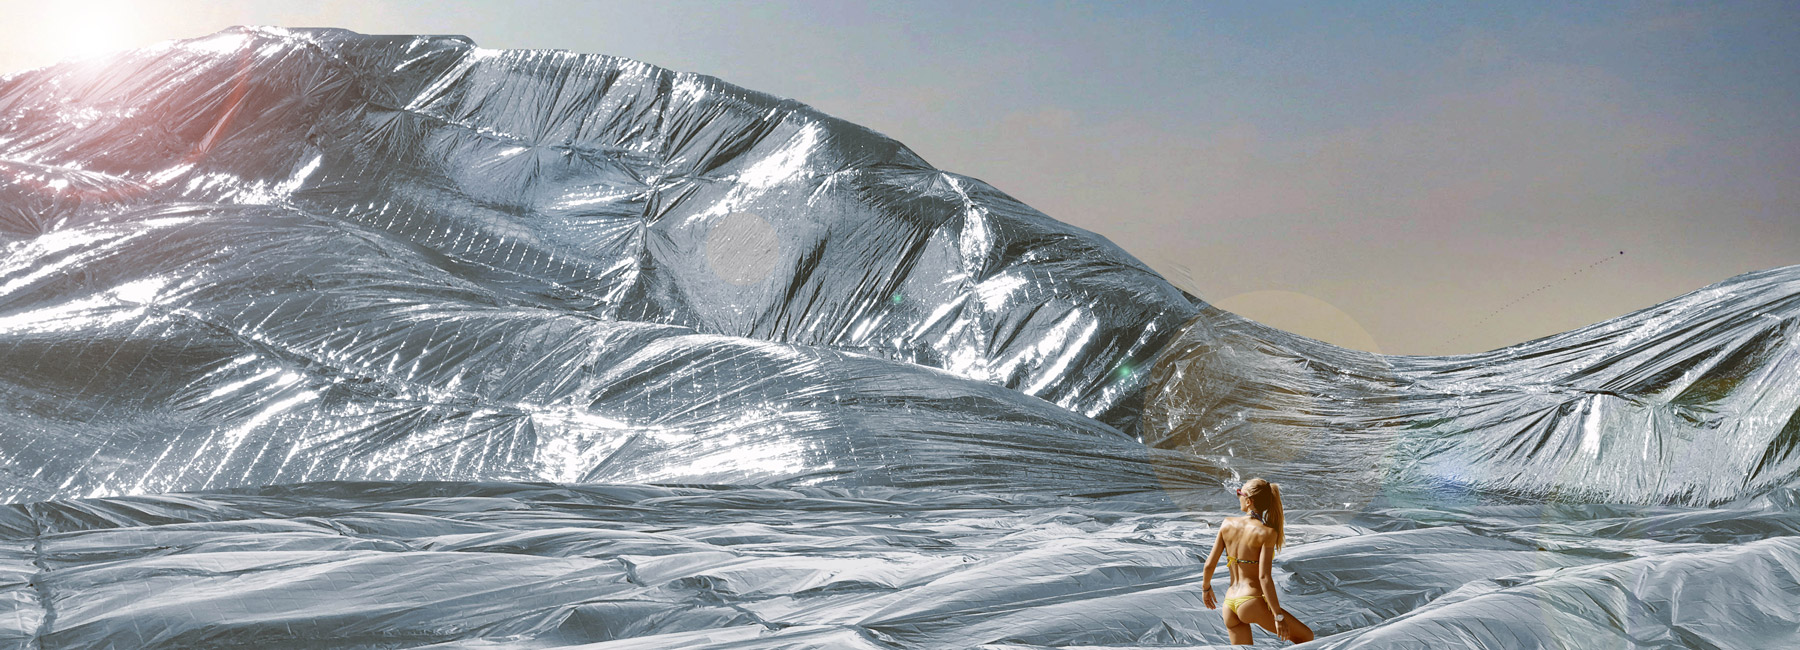 10.000 sqm NASA space blanket to cover this year's burning man, by sasha shtanuk